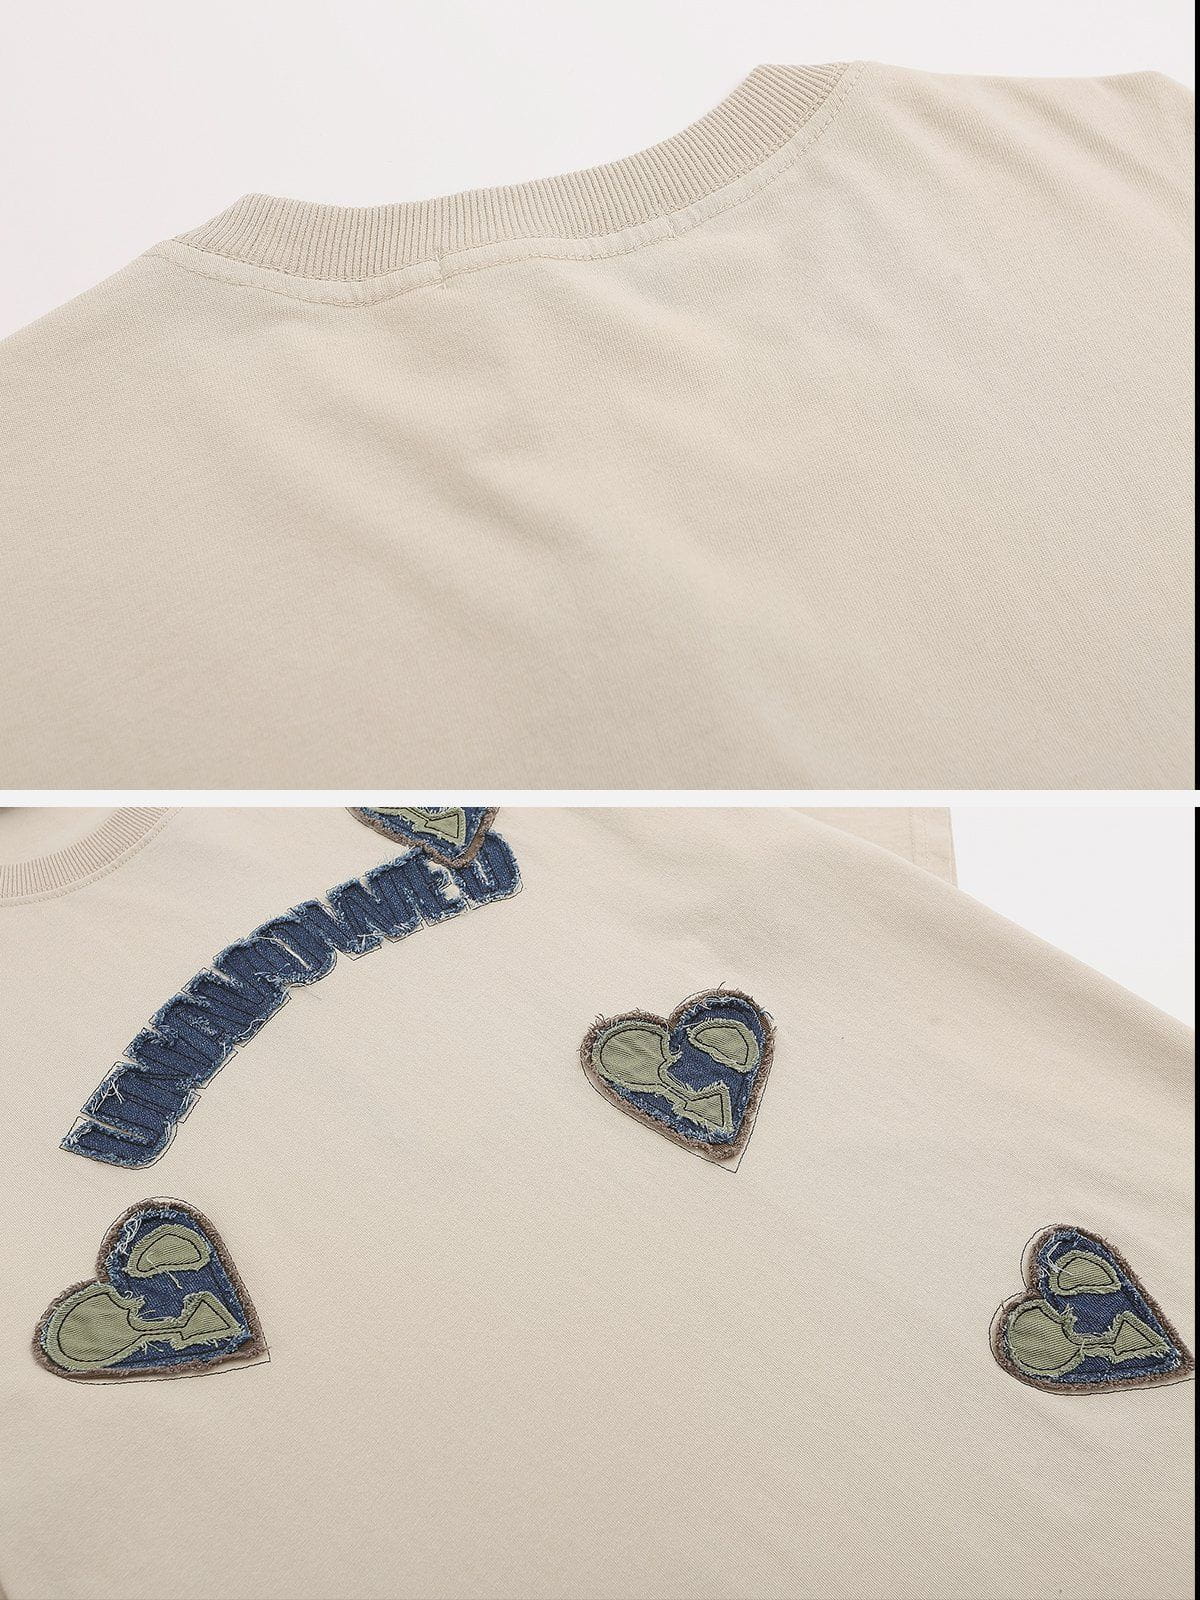 Sneakerland™ - Applique Embroidery Denim Heart Elements Tee